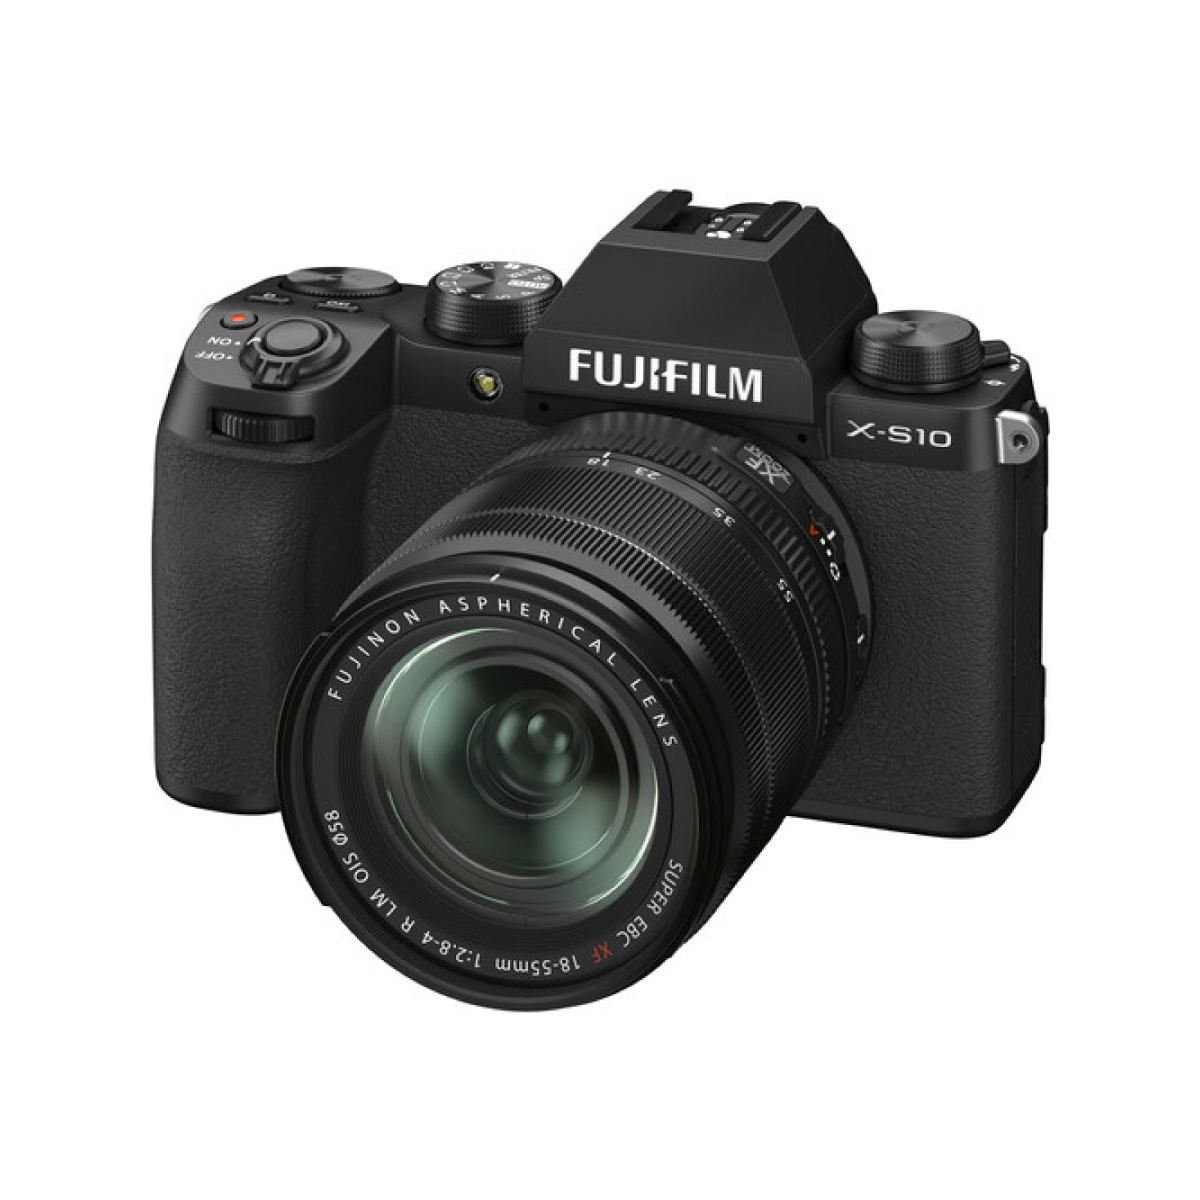 Fujifilm X-S10 Mirrorless Camera Body with XF18-55mm Lens – Black (3)